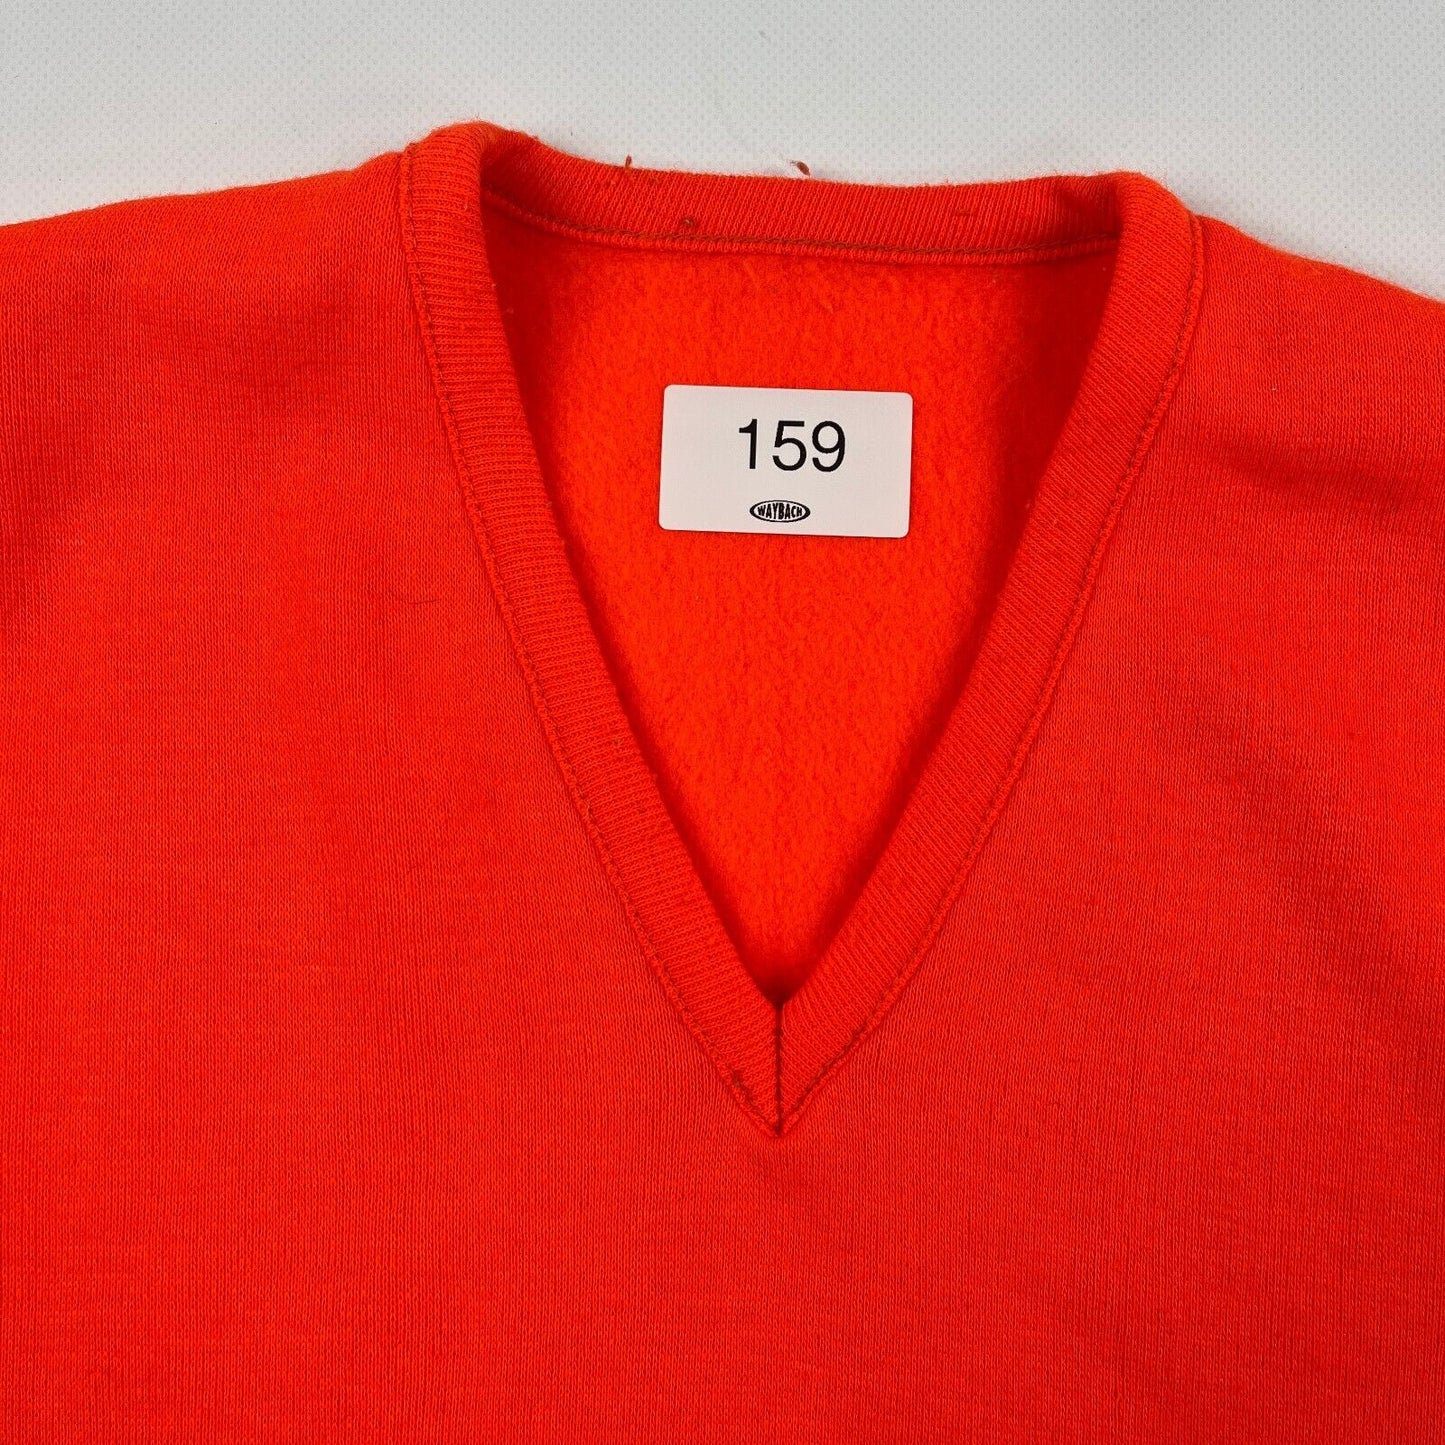 VINTAGE 90s Blank Orange Short Sleeve Crewneck Sweater sz Small Men